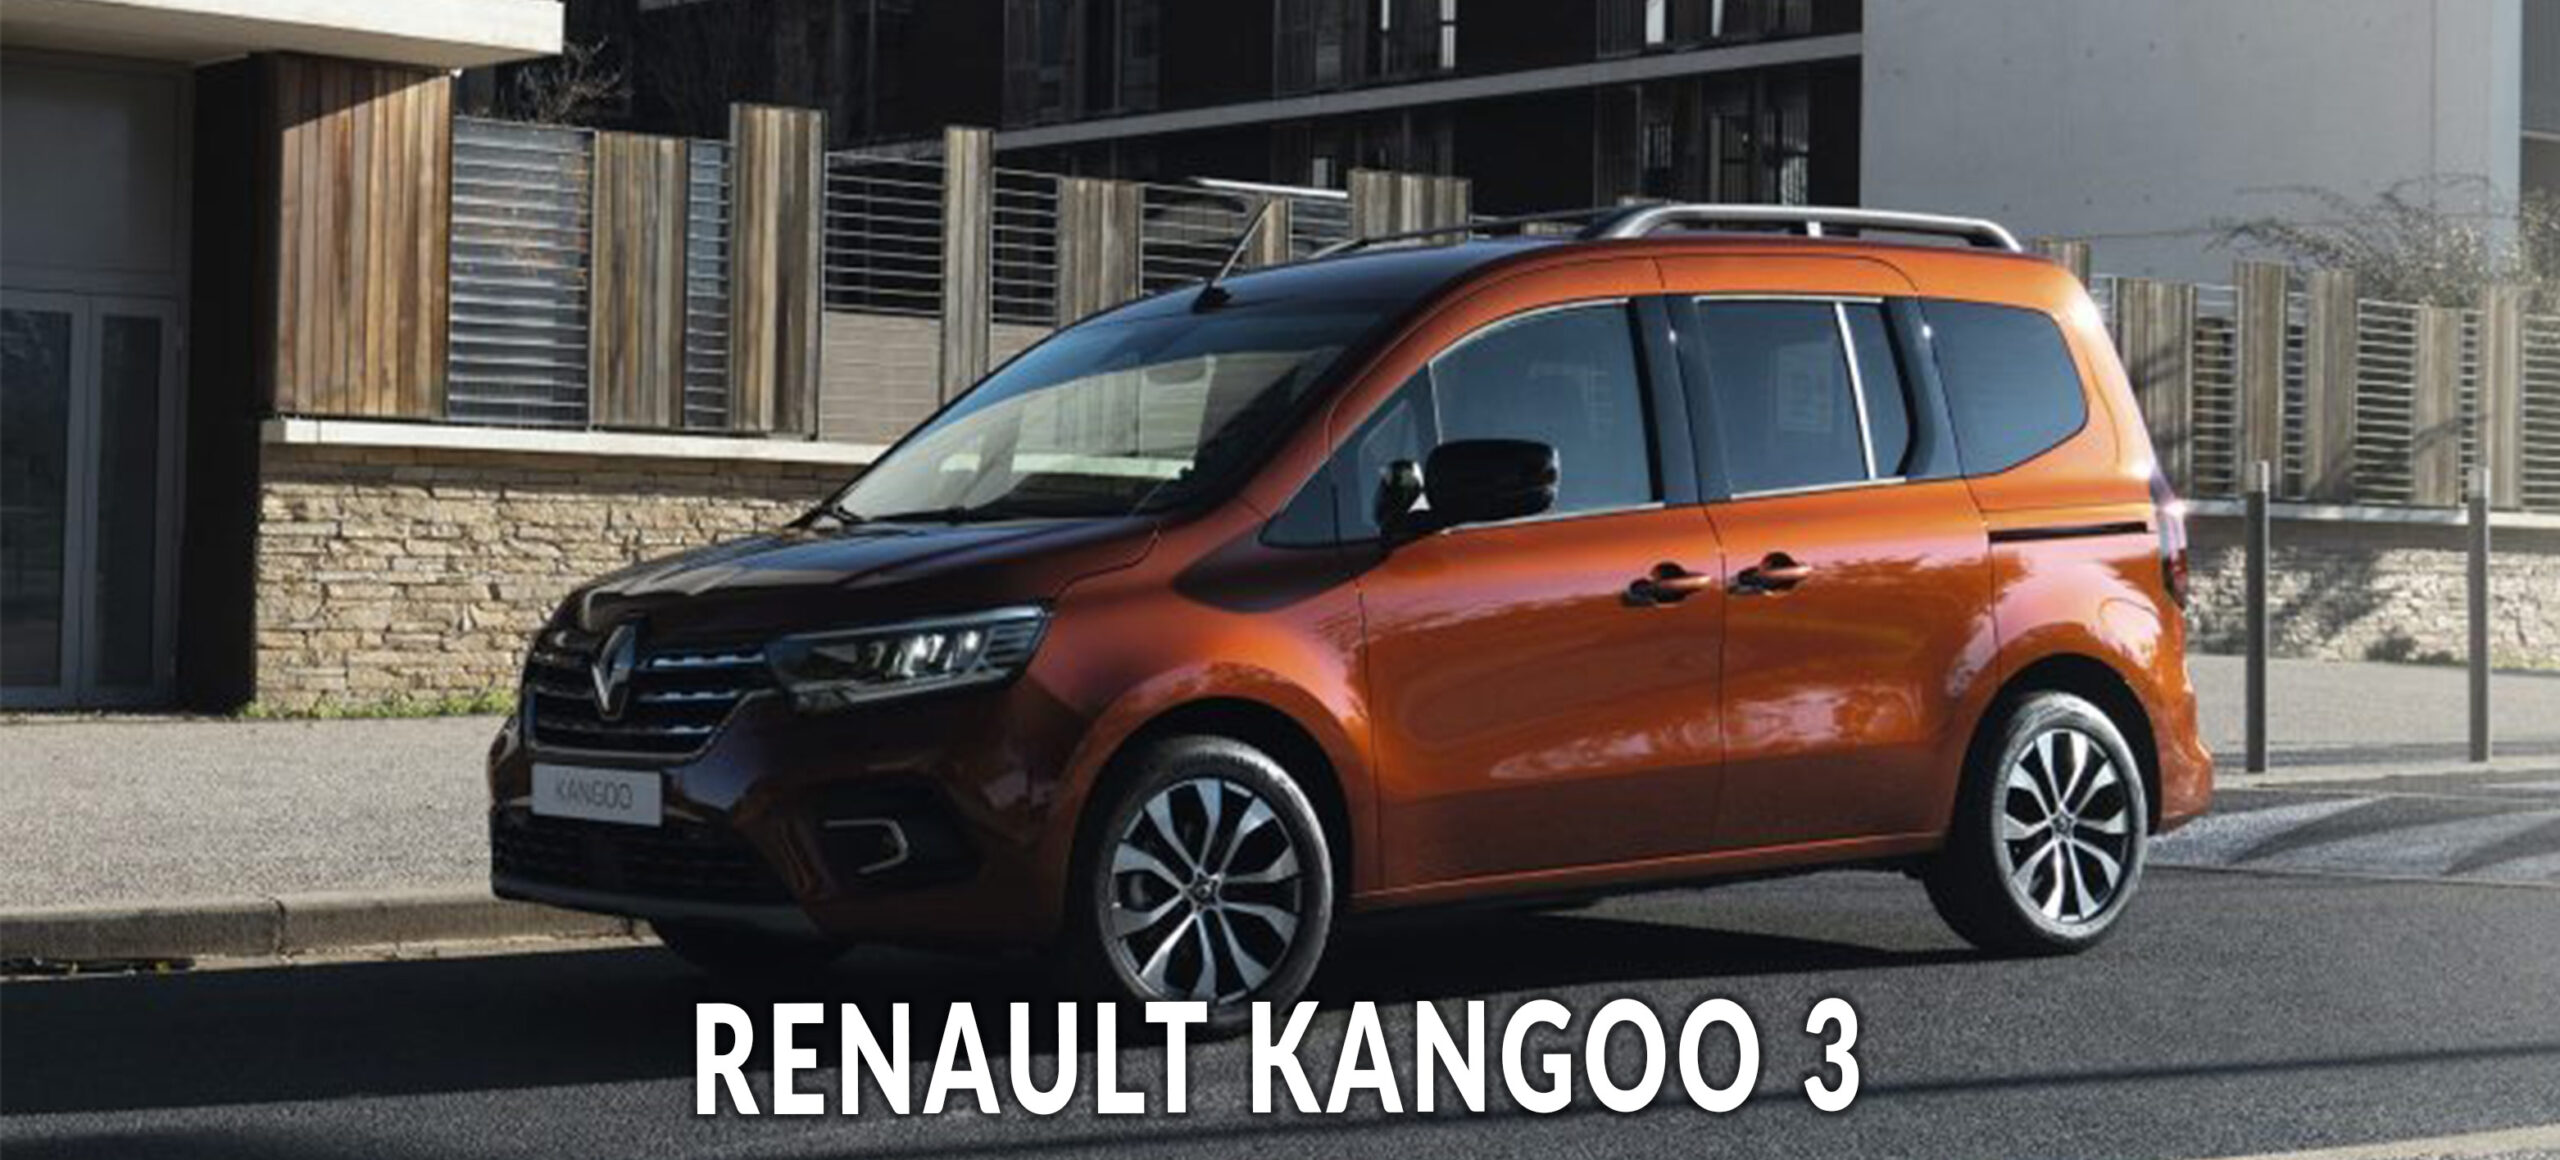 Renault Kangoo 3